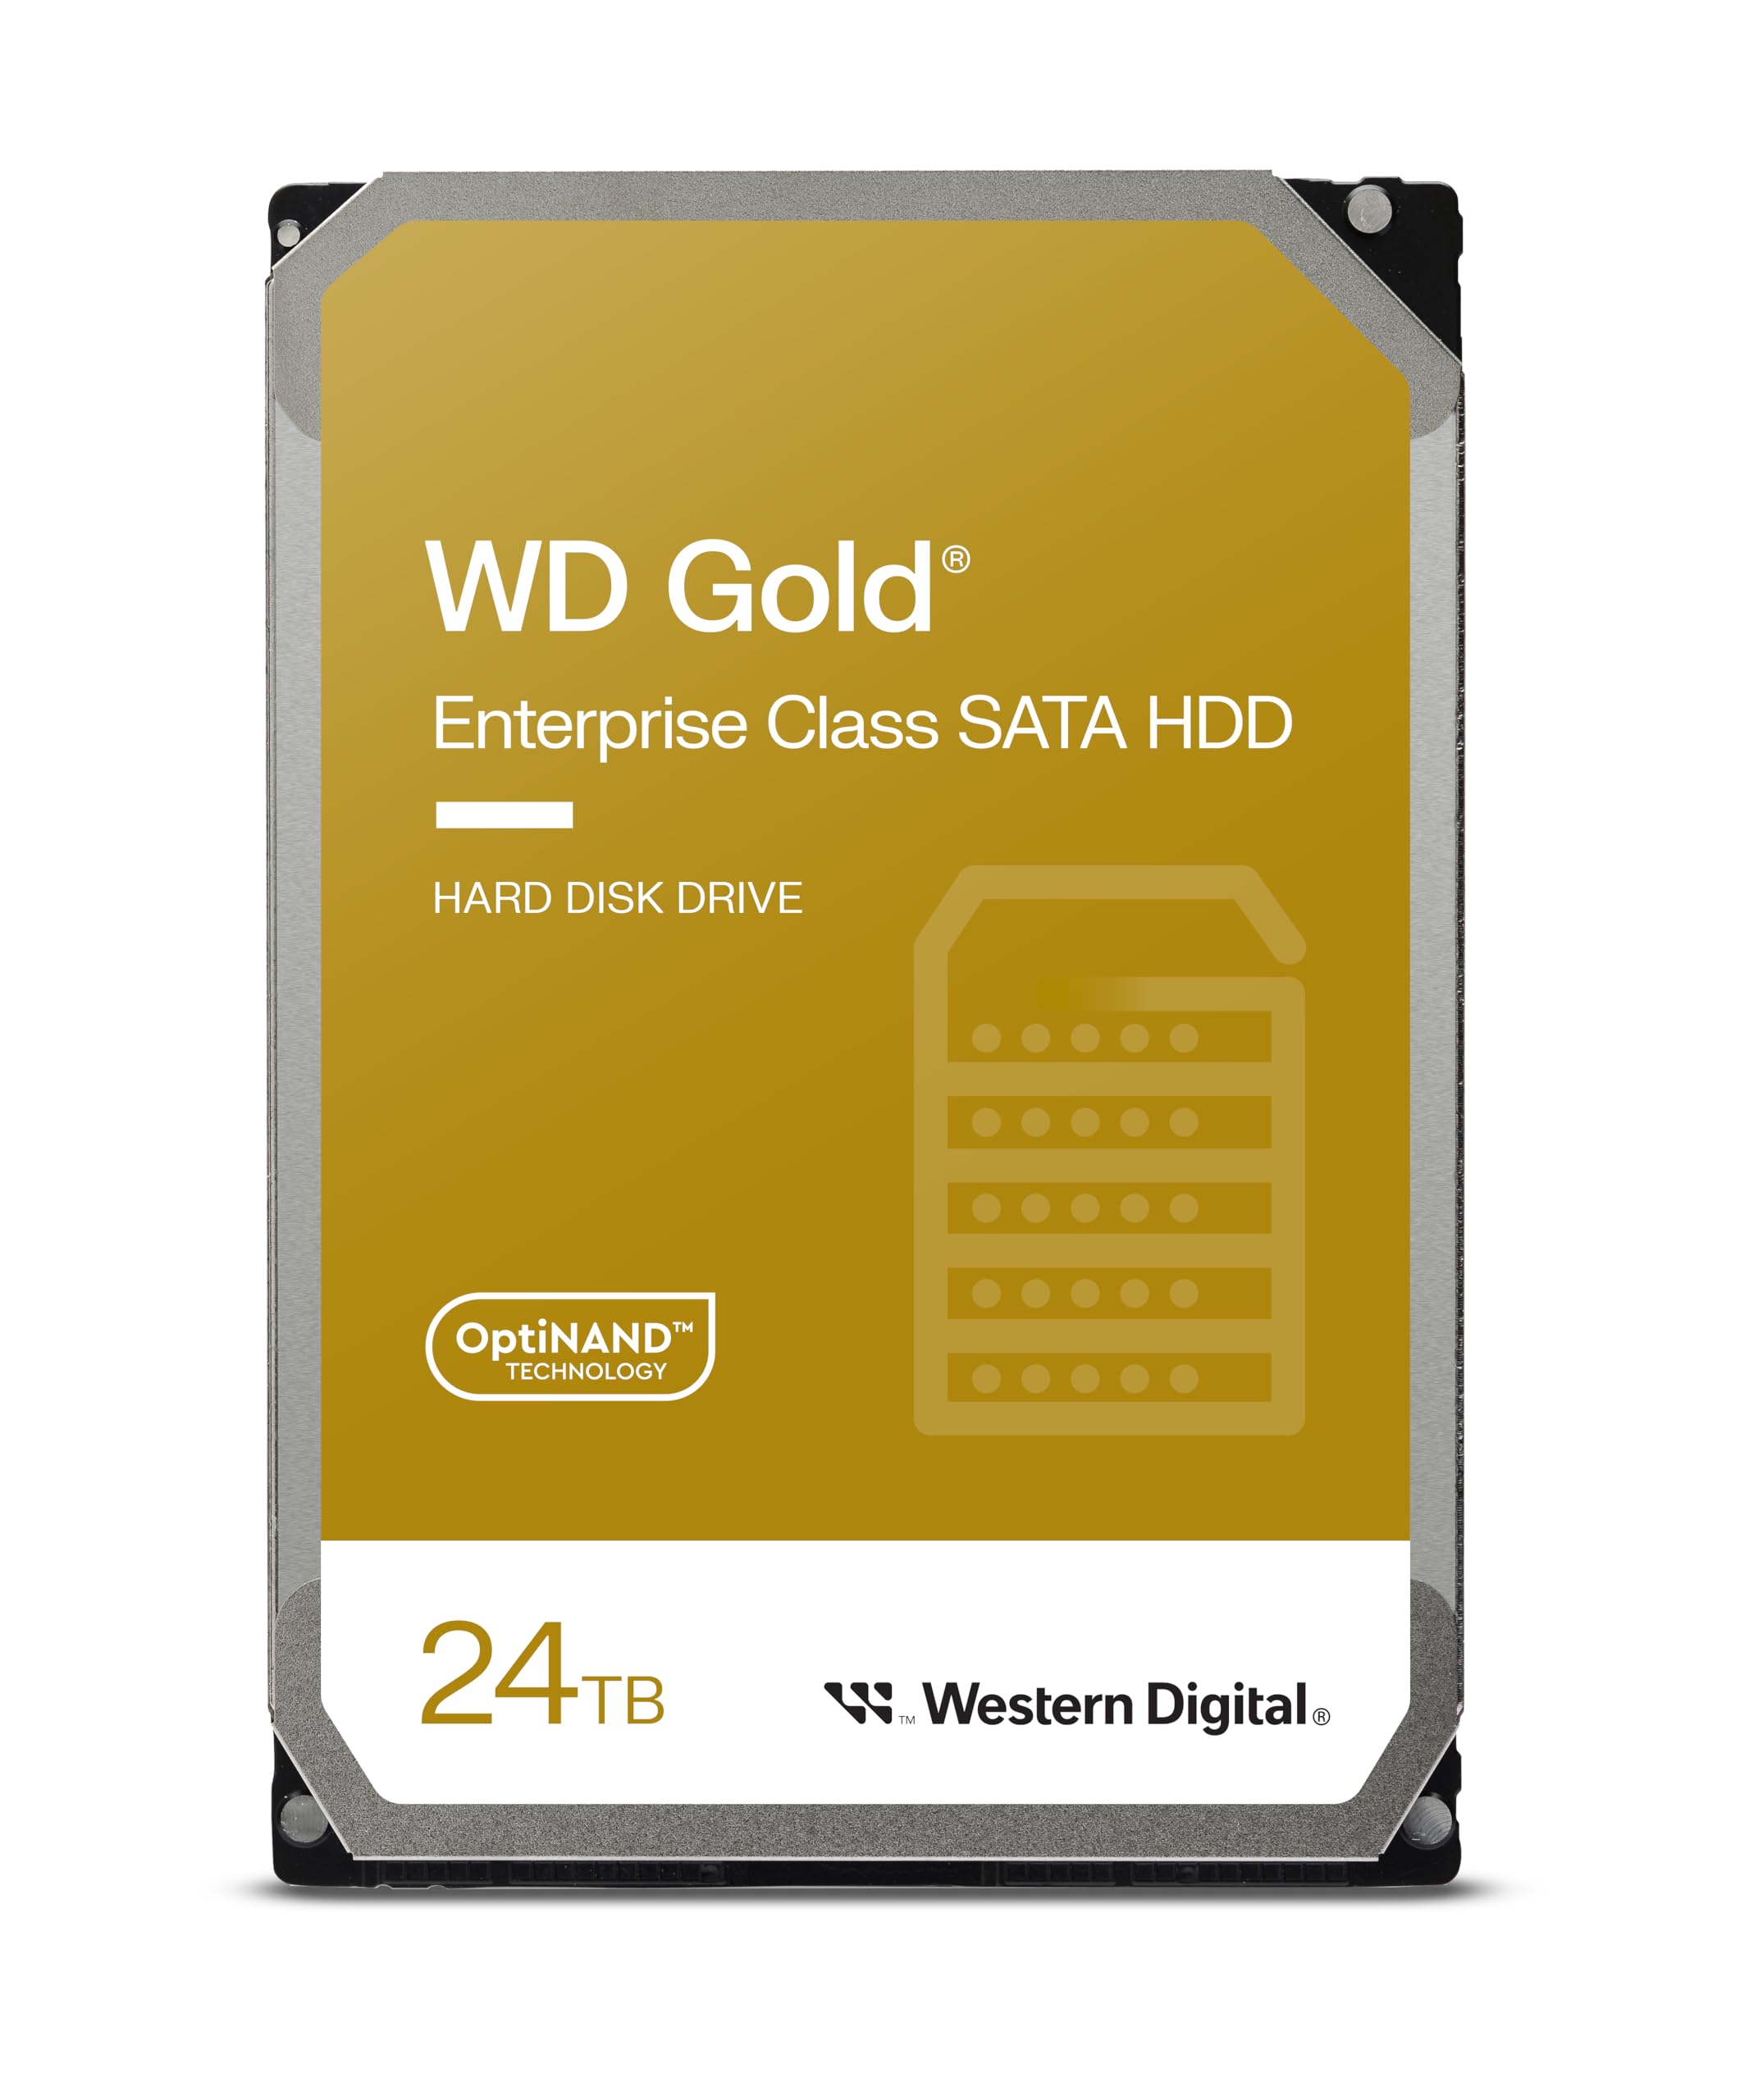 WD Gold 24TB Hard Drive